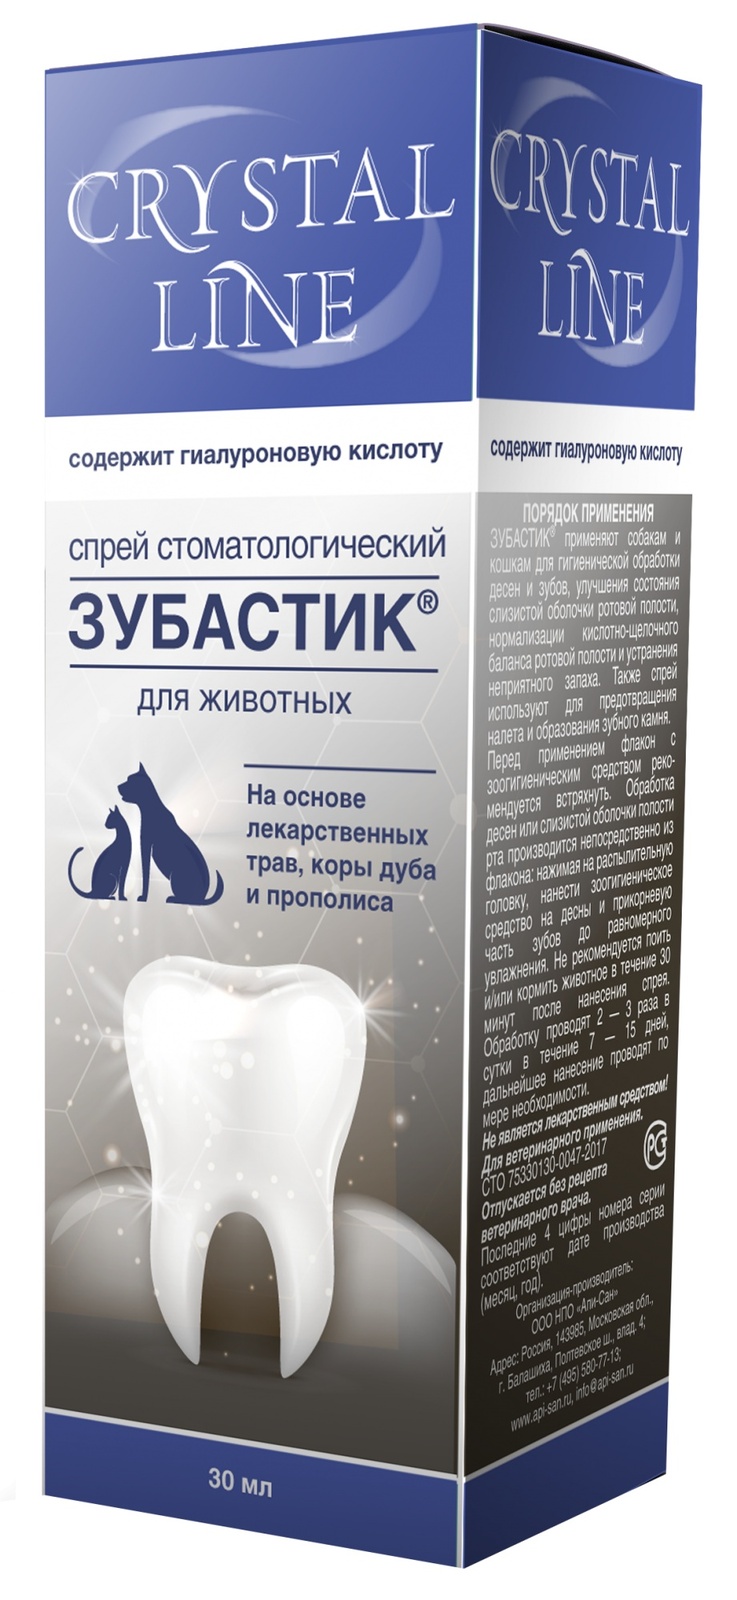 Apicenna зубастик спрей для чистки зубов Crystal line (30 г)